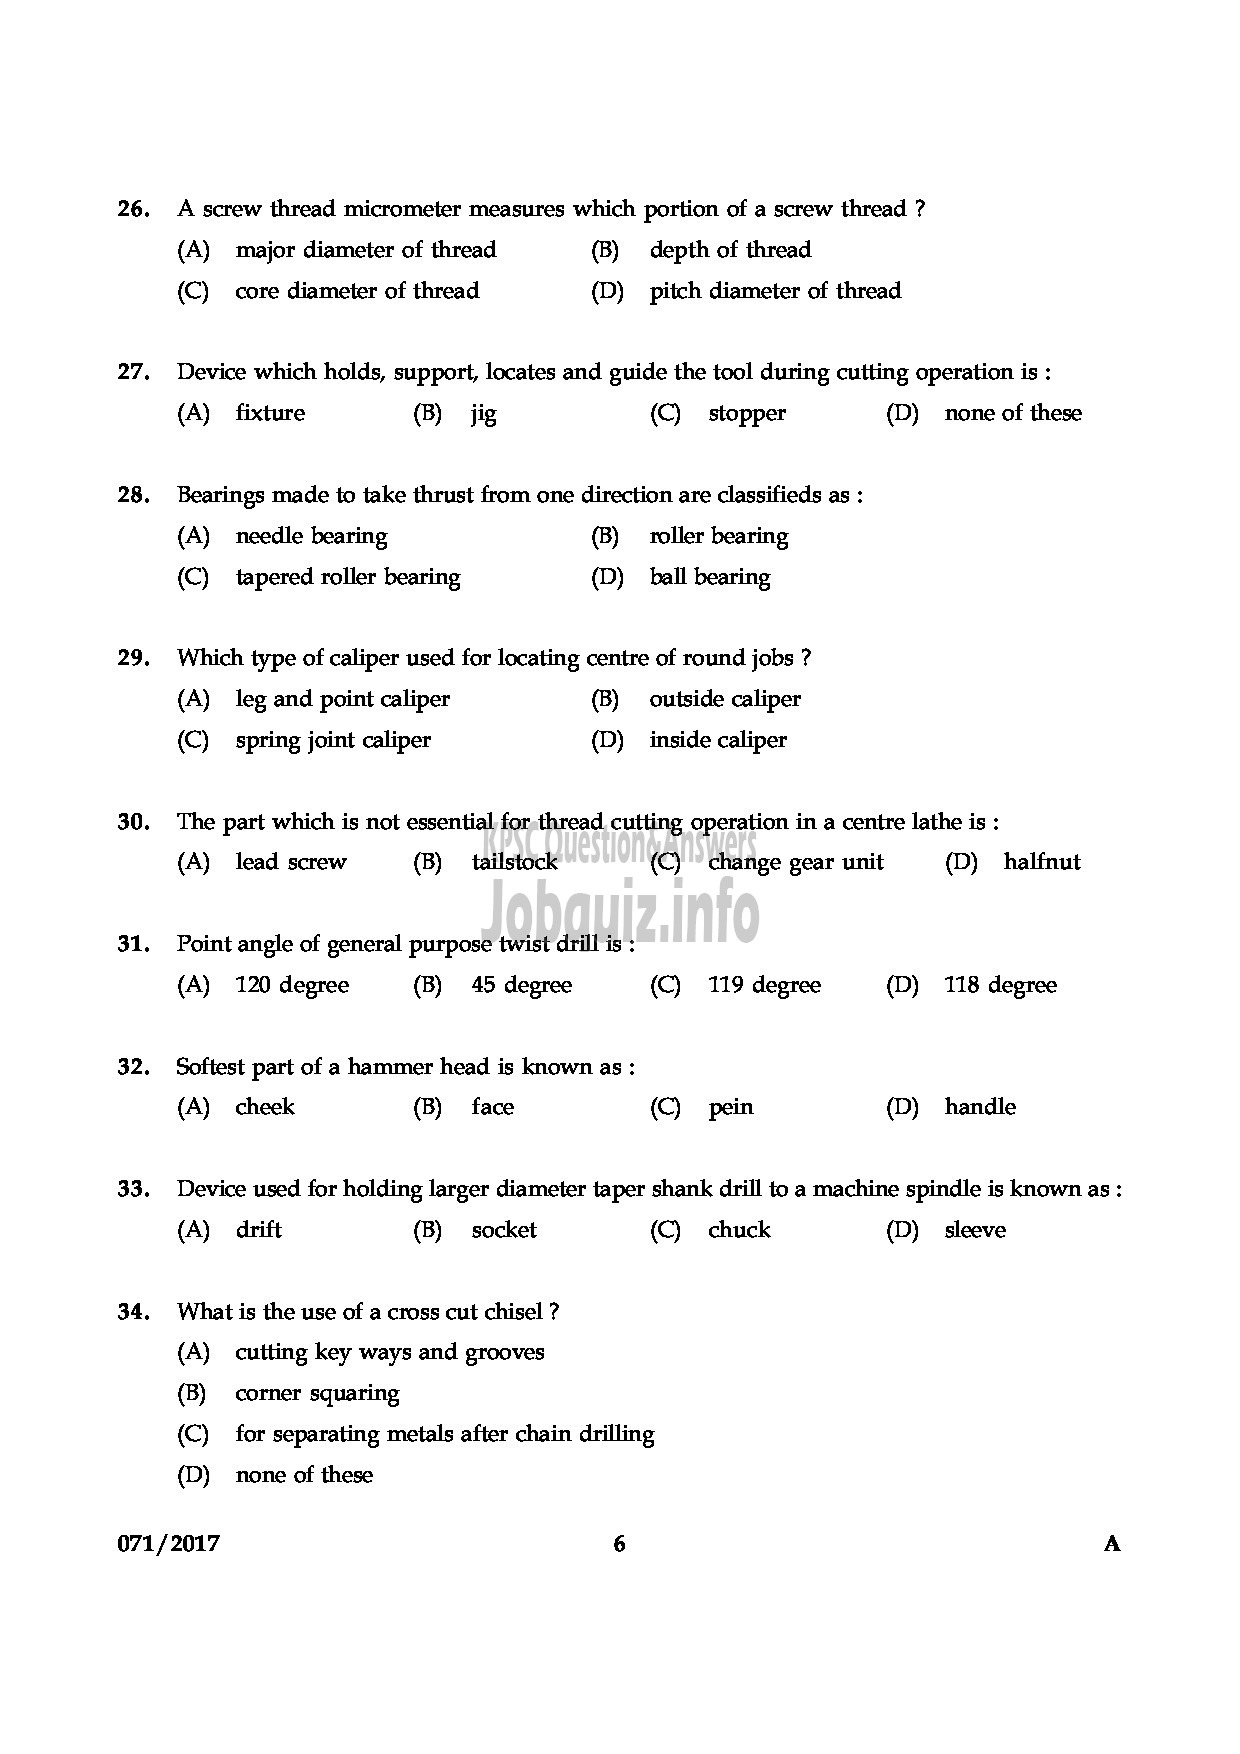 Kerala PSC Question Paper - MECHANICAL OPERATOR PHARMACEUTICAL CORPORATION IM KERALA LTD QUESTION PAPER QUESTION PAPER-5